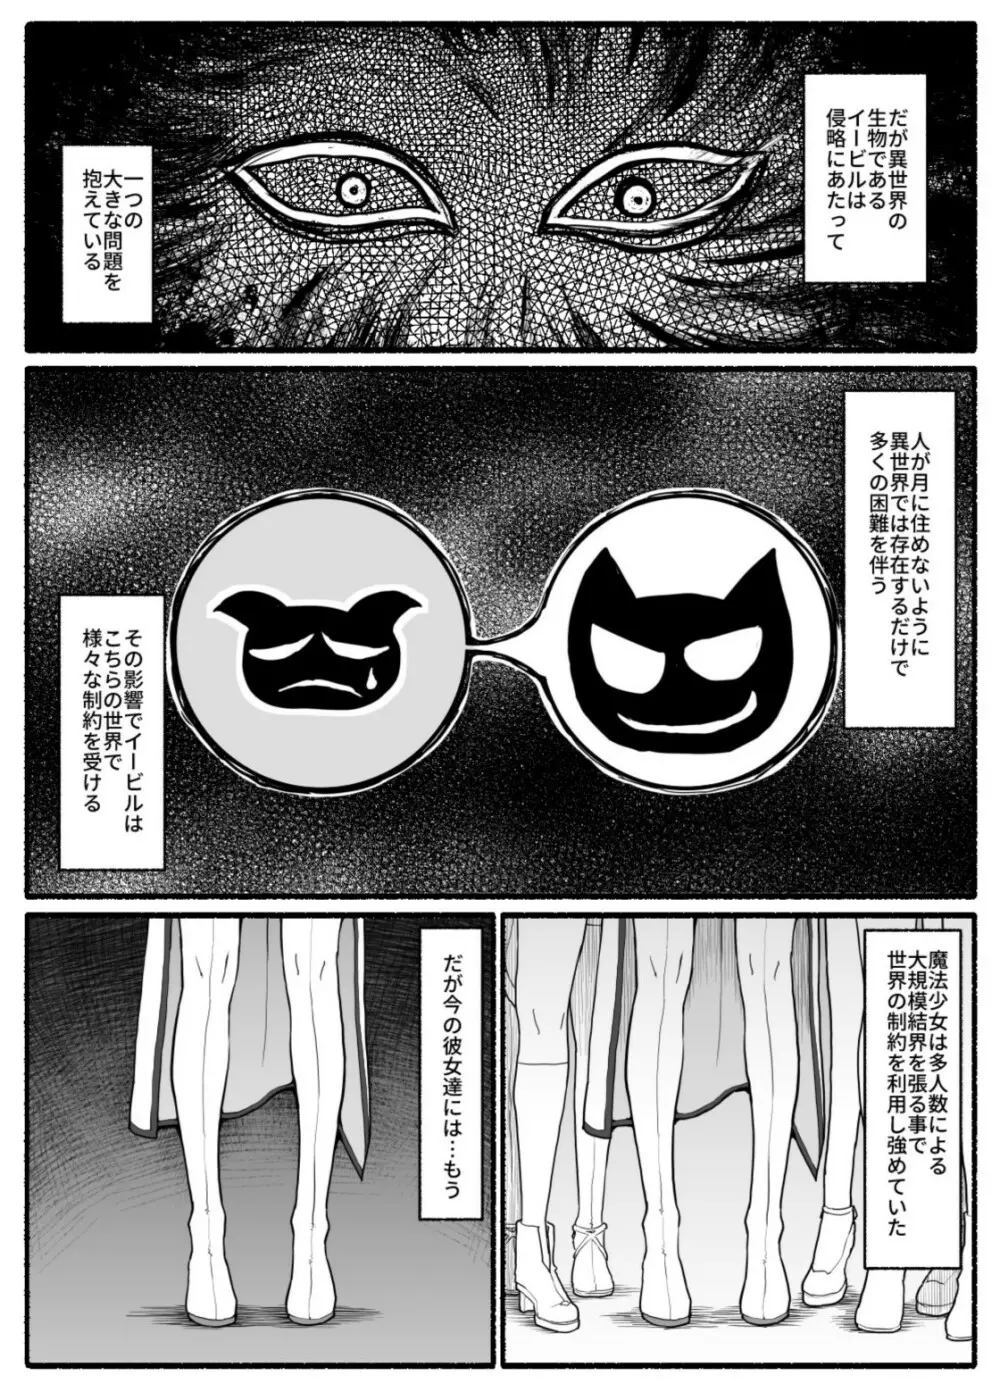 魔法少女vs淫魔生物 17 3ページ